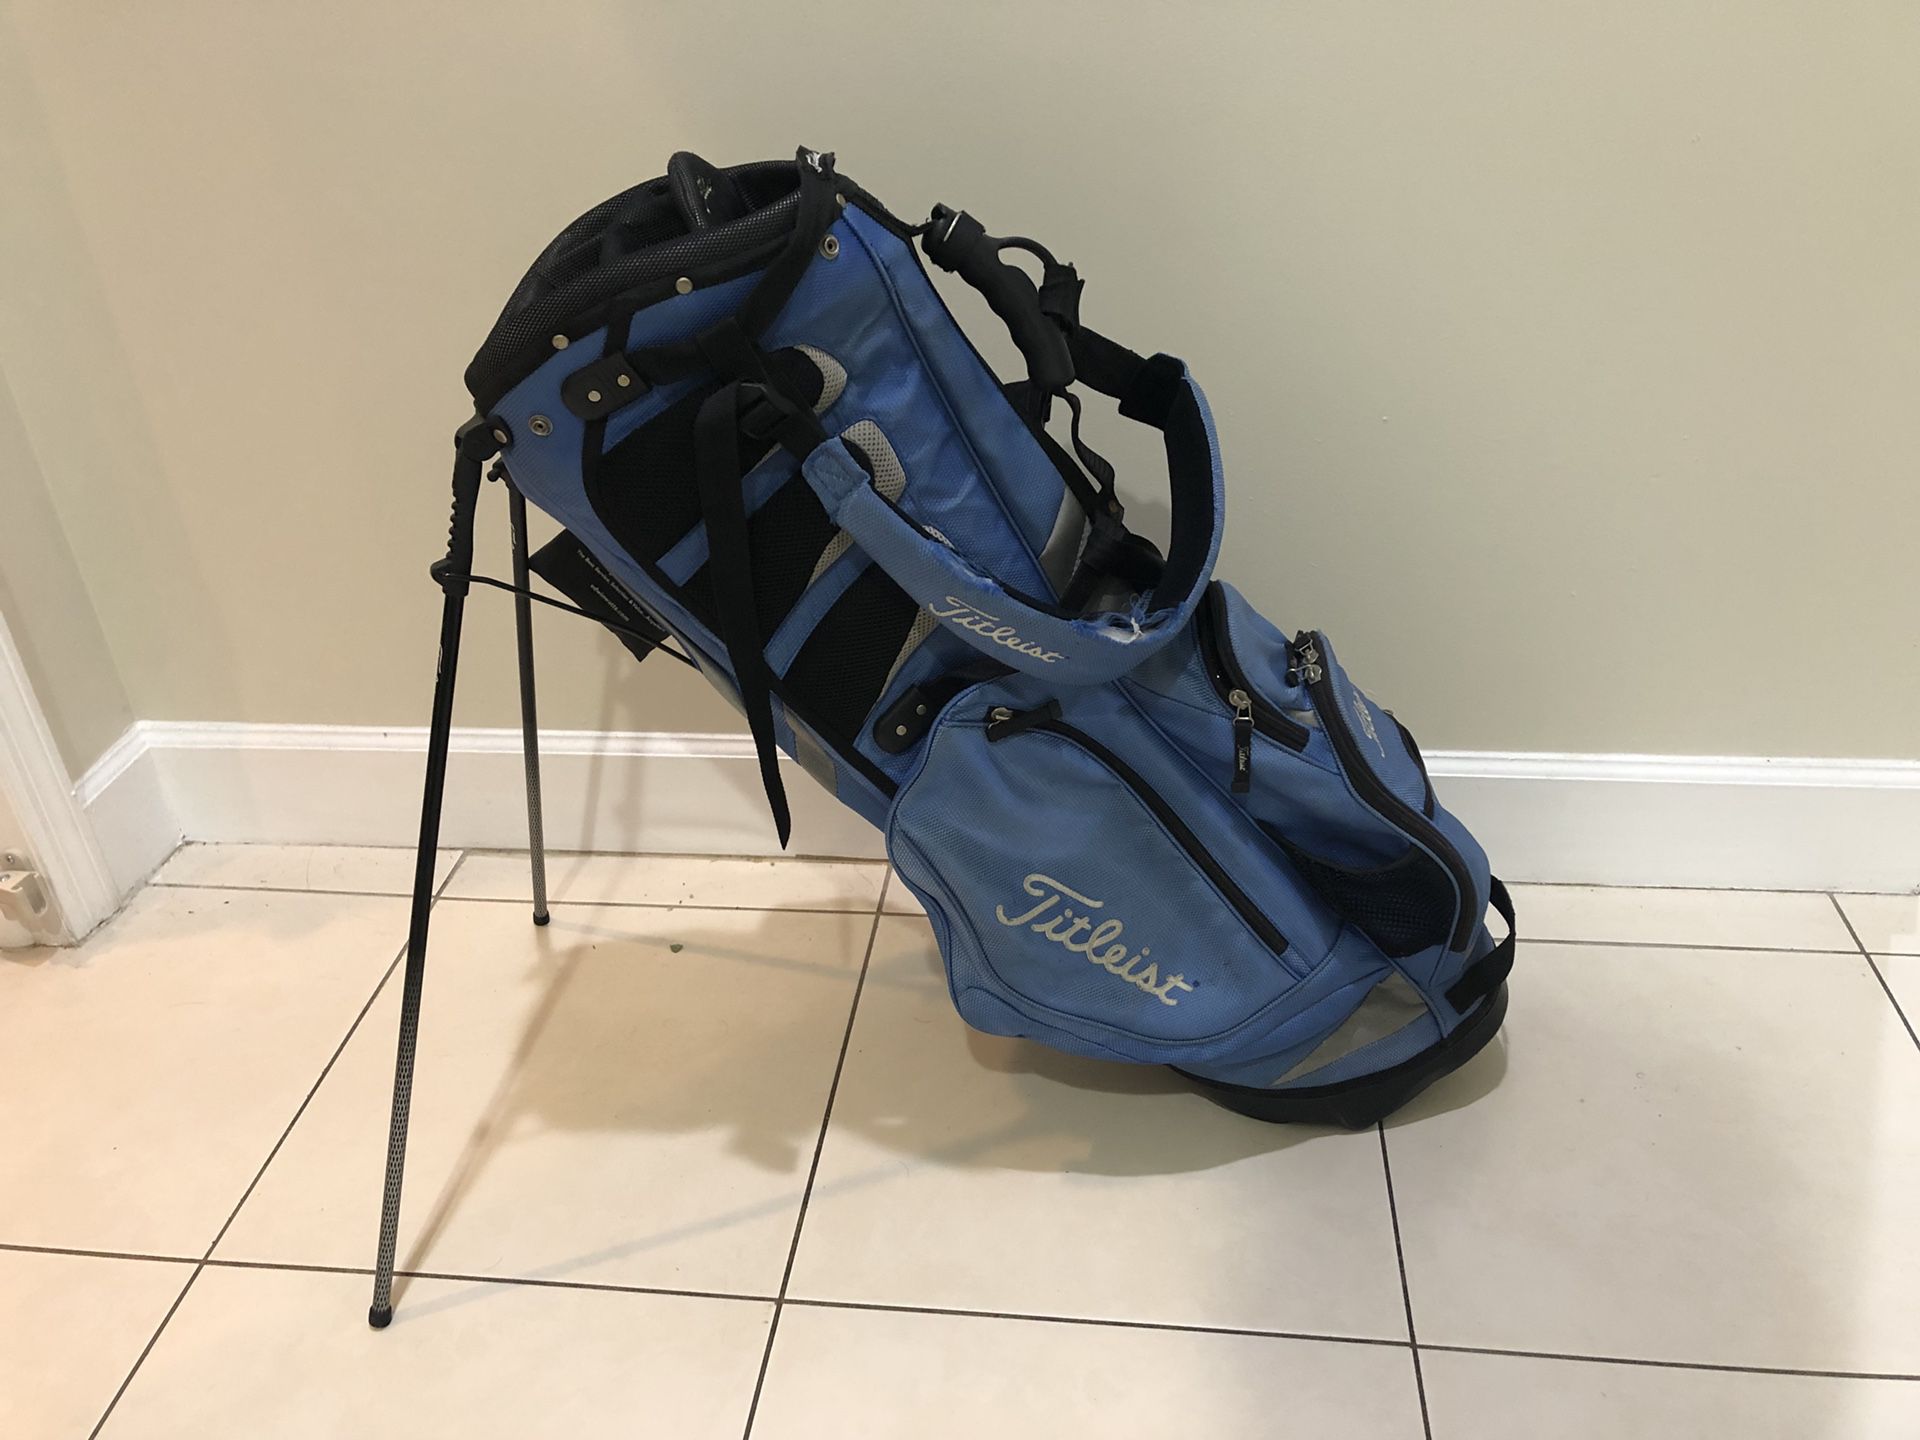 Titleist golf bag